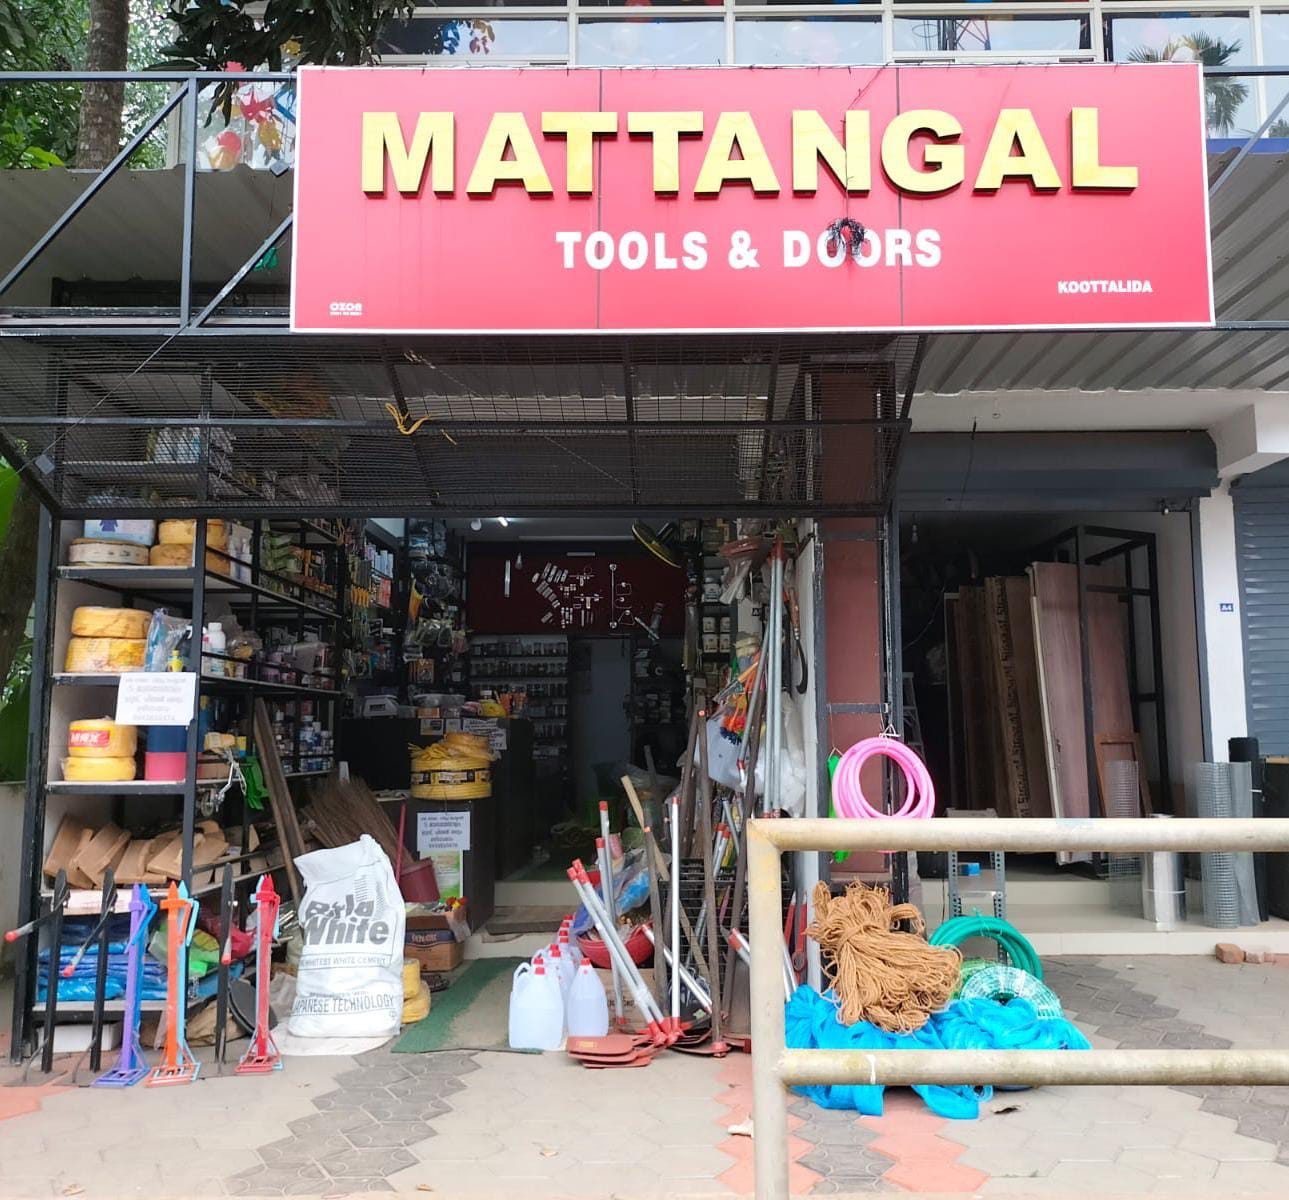 MATTANGAL Tools & Doors